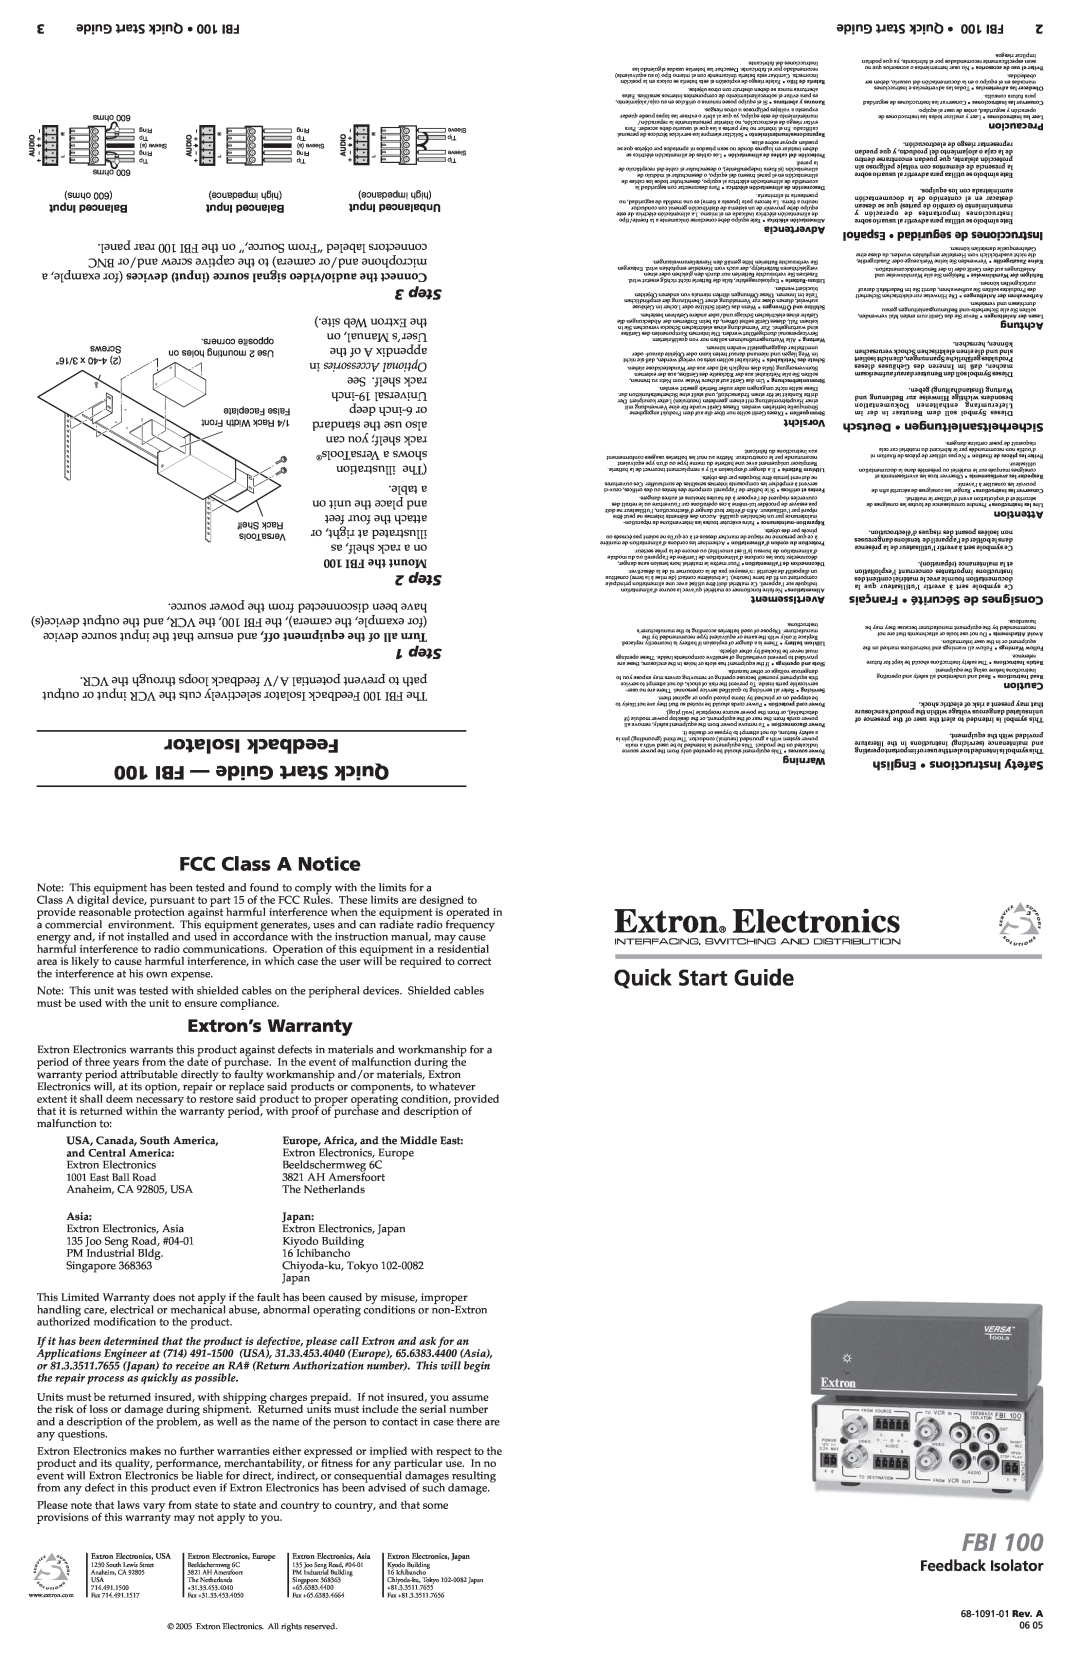 Extron electronic FBI 100 user manual Isolator Feedback, FBI - Guide Start Quick, FCC Class A Notice, Extron’s Warranty 